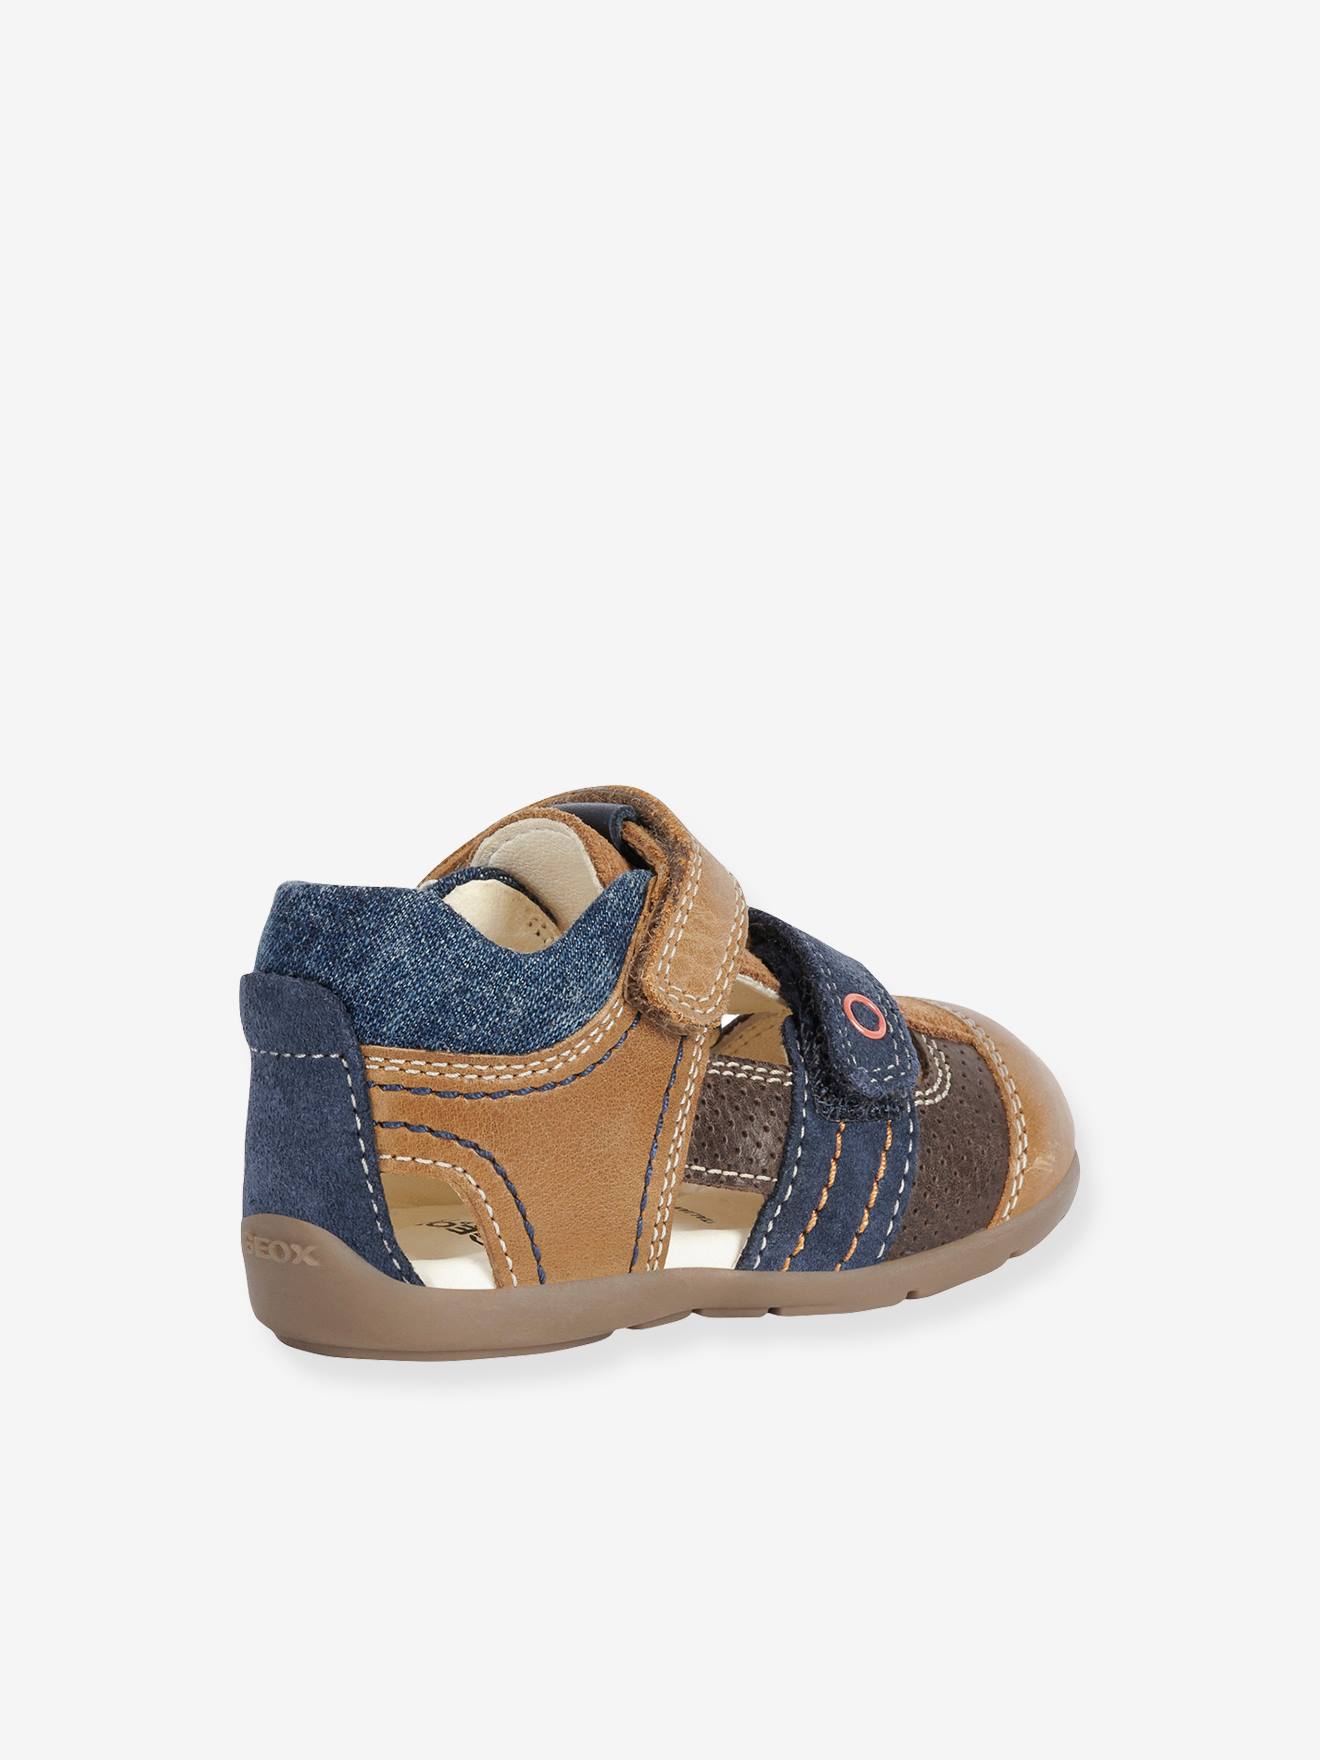 Salida giro Mal Sandals for Babies, Kaytan by GEOX® - beige, Shoes